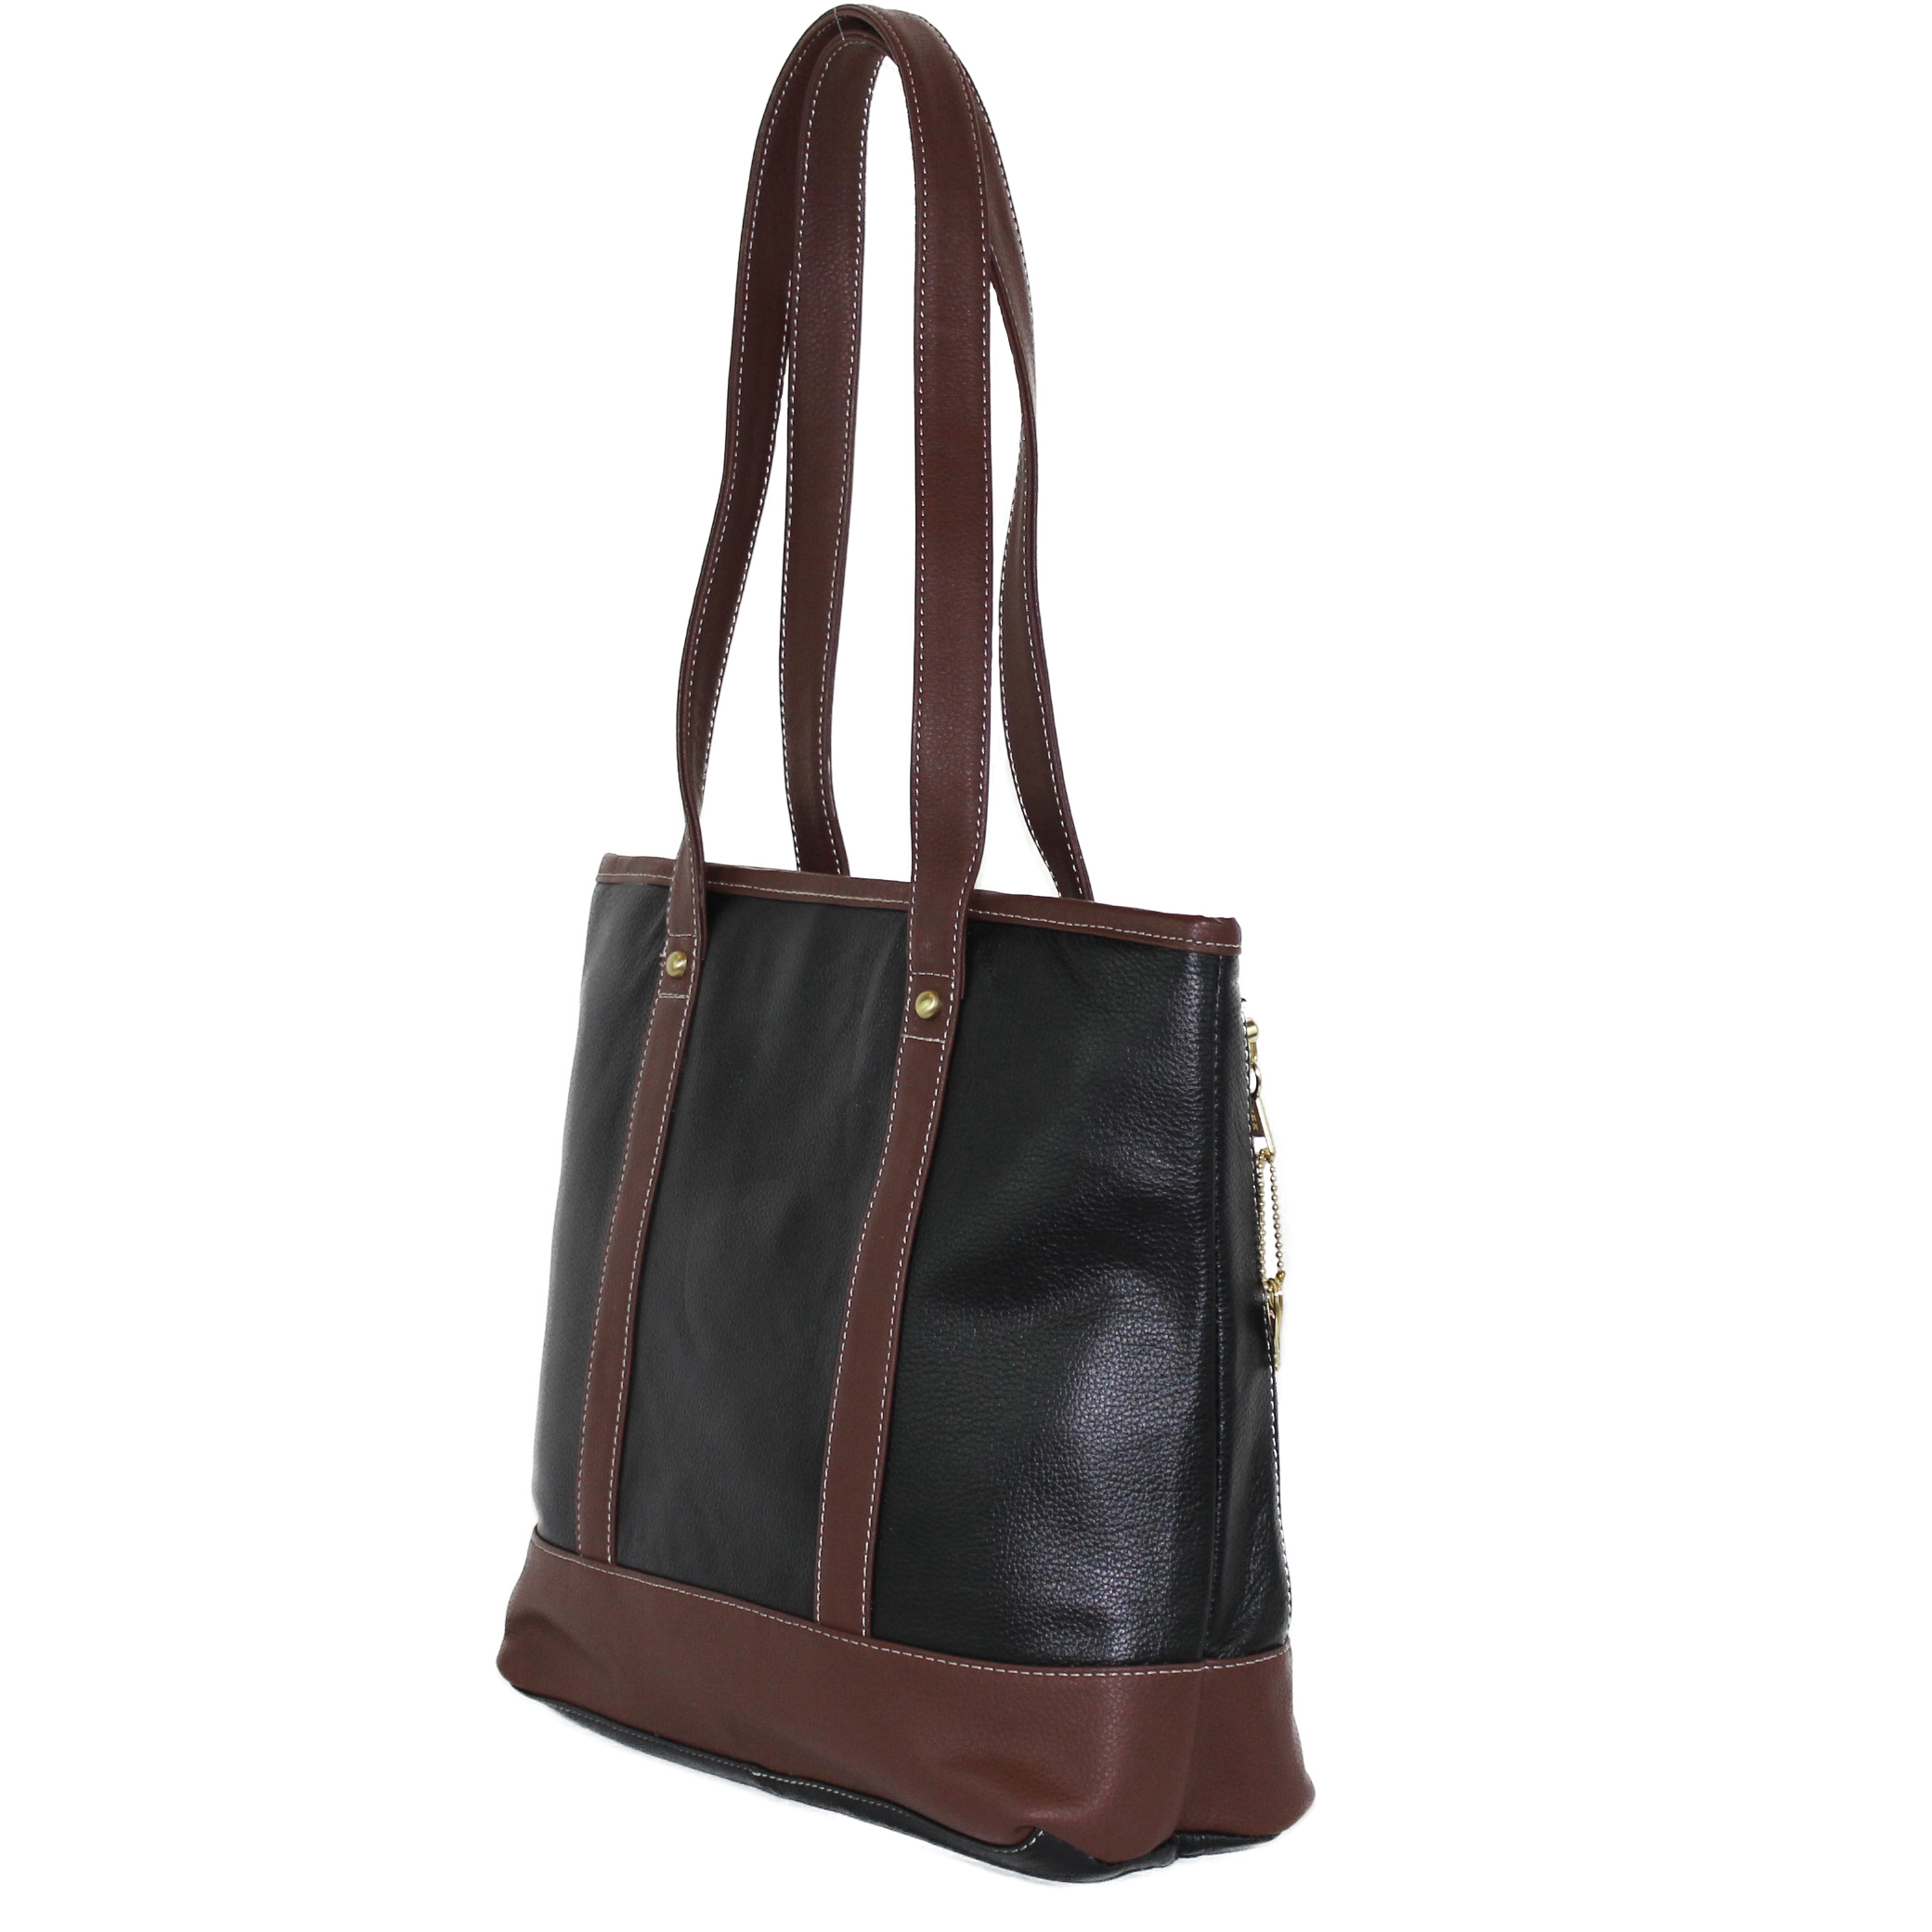 Black And Brown Leather Bag | NAR Media Kit